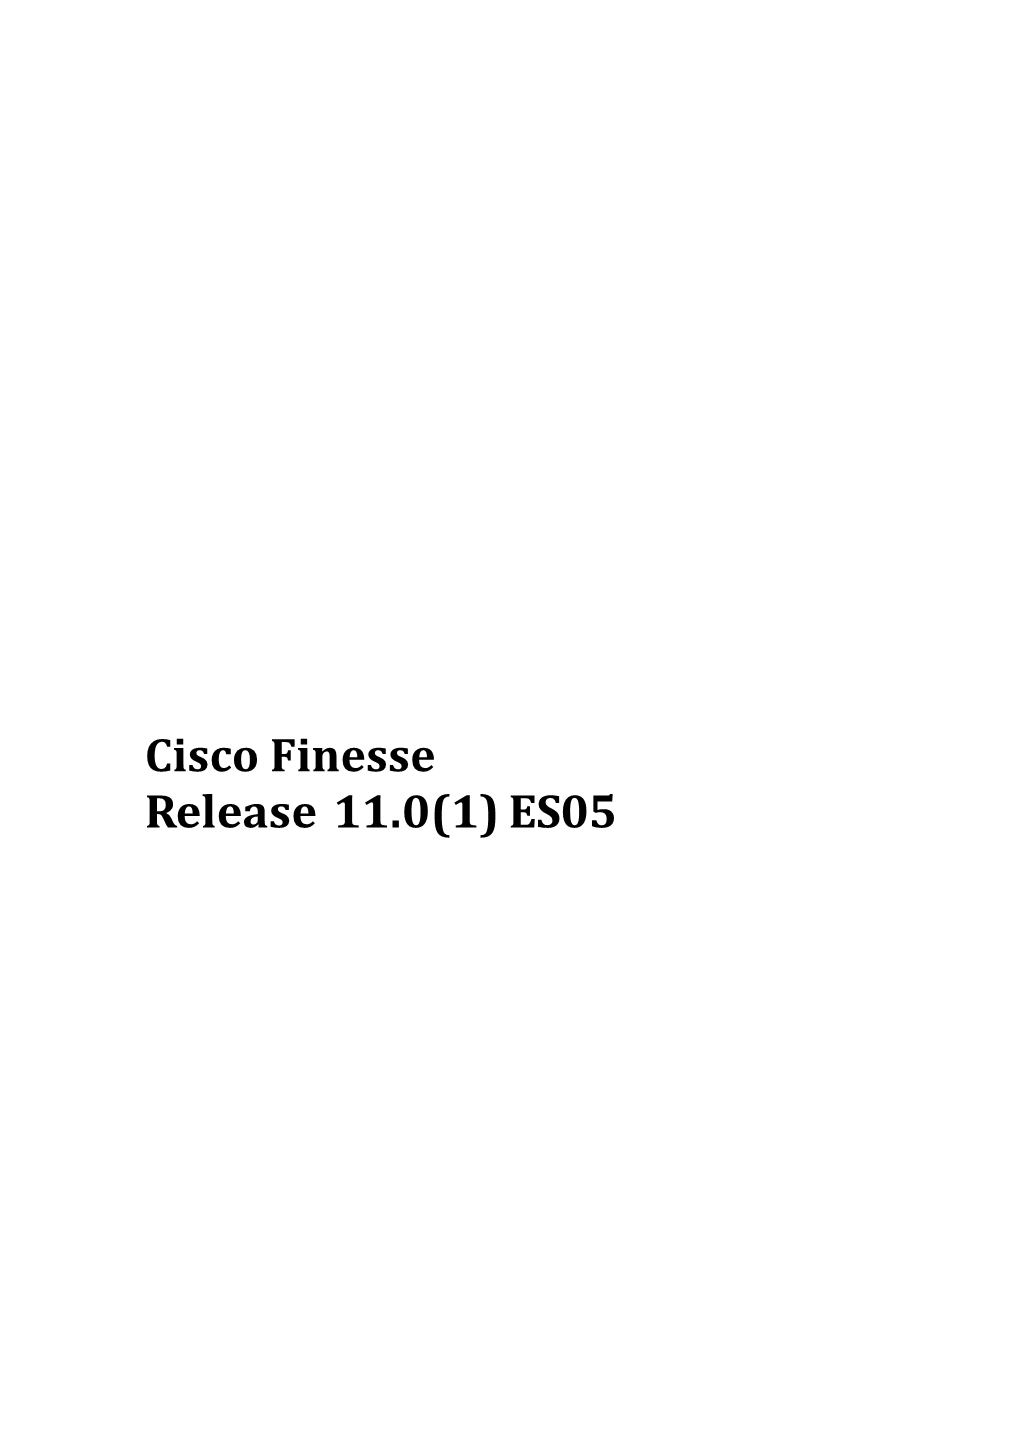 Installing Finesse Release 11.0(1) ES05